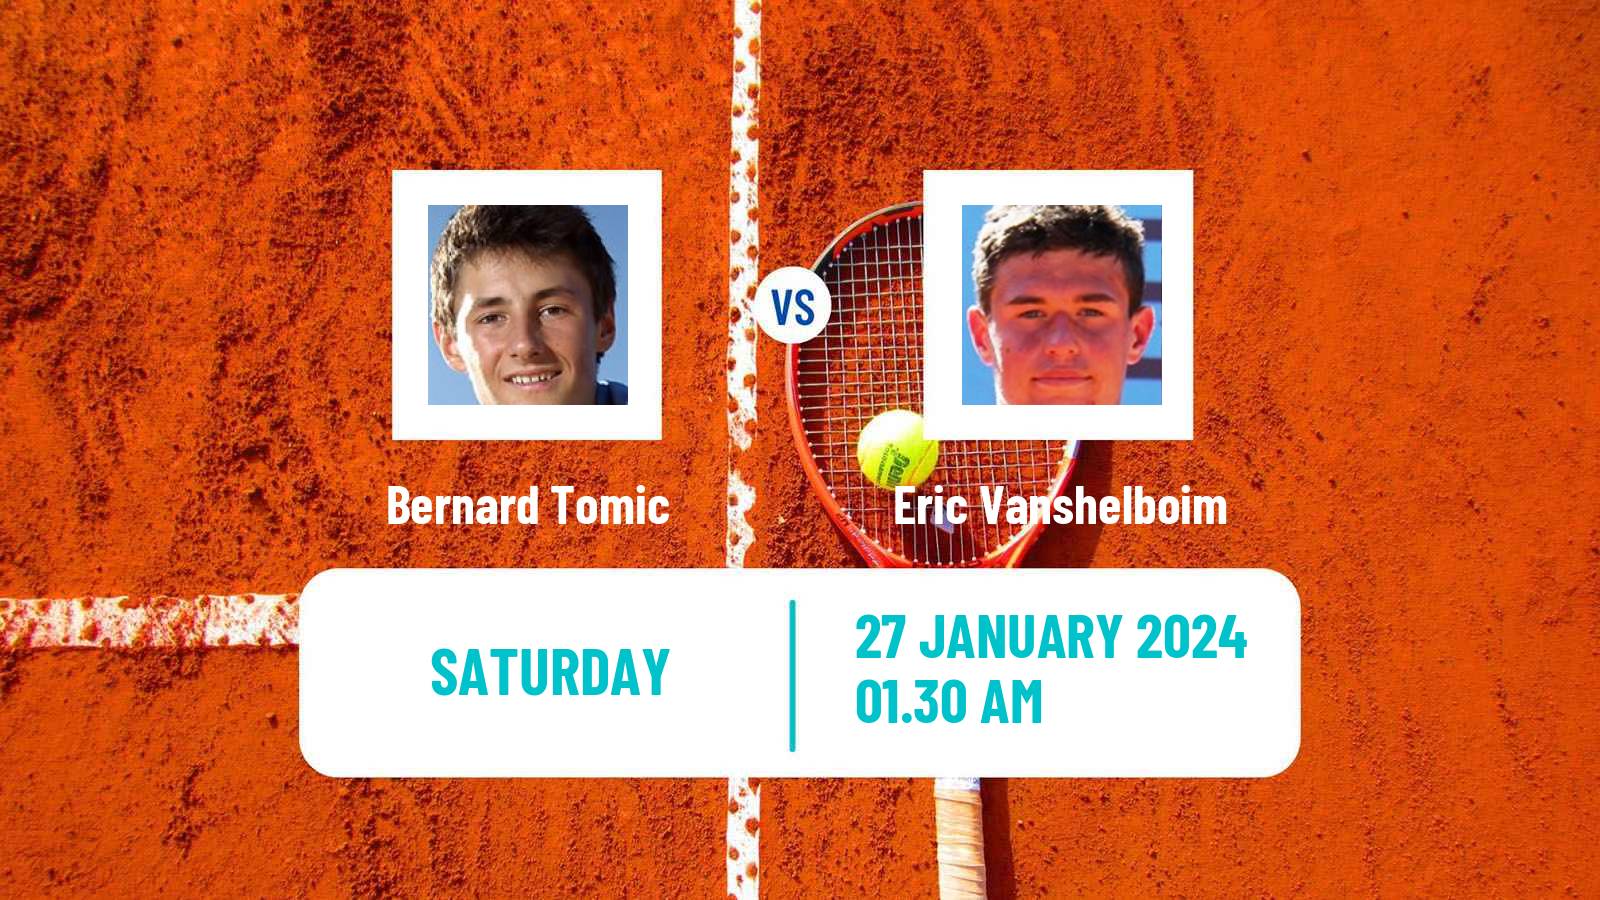 Tennis ITF M25 Chennai Men Bernard Tomic - Eric Vanshelboim